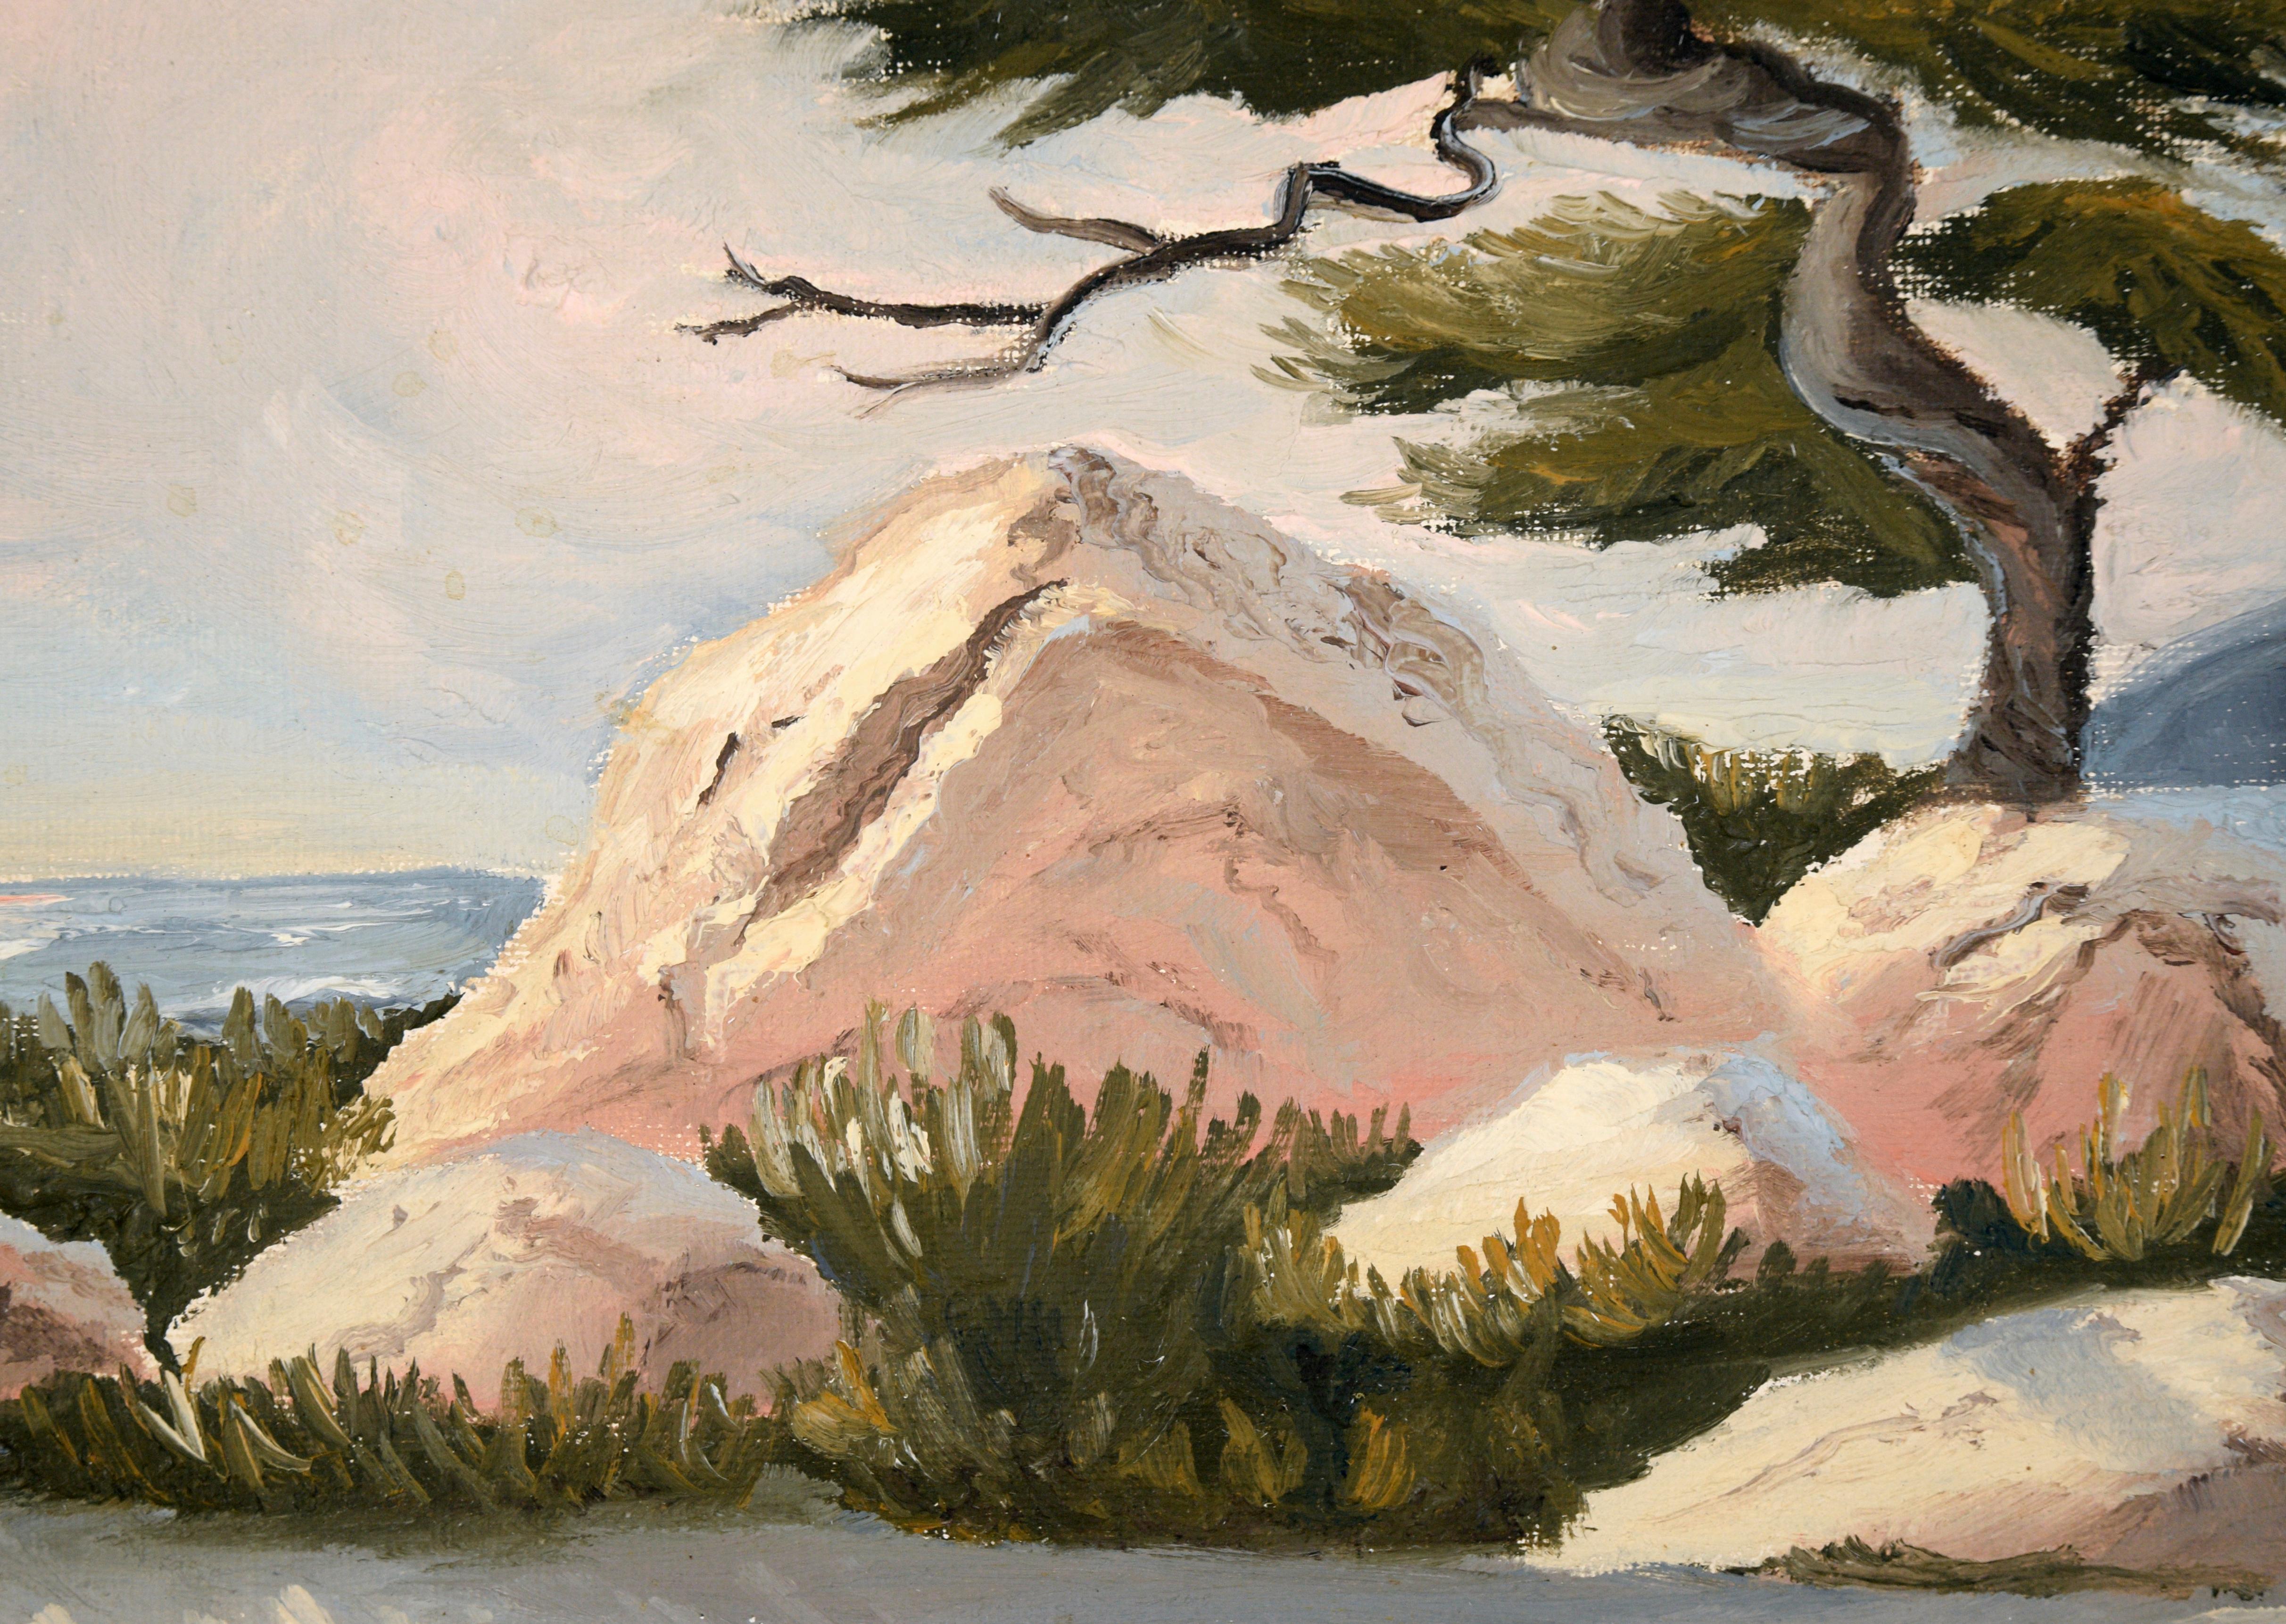 Carmel Beach Landscape - Oil on Artist's Board - Brown Landscape Painting by Unknown